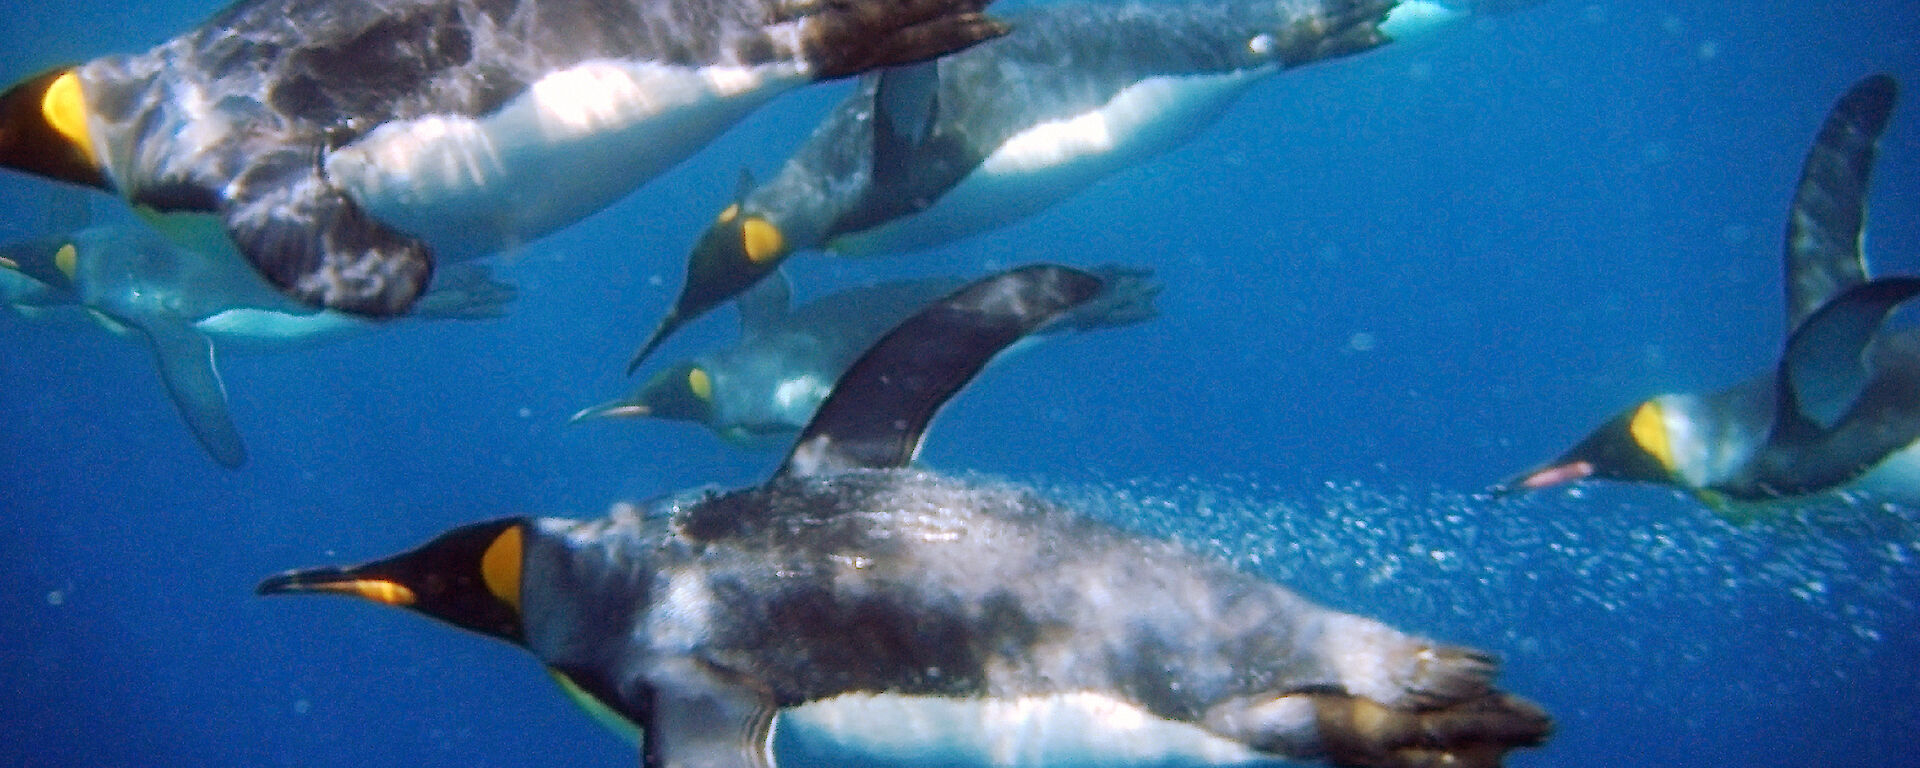 King penguins swimming under water.